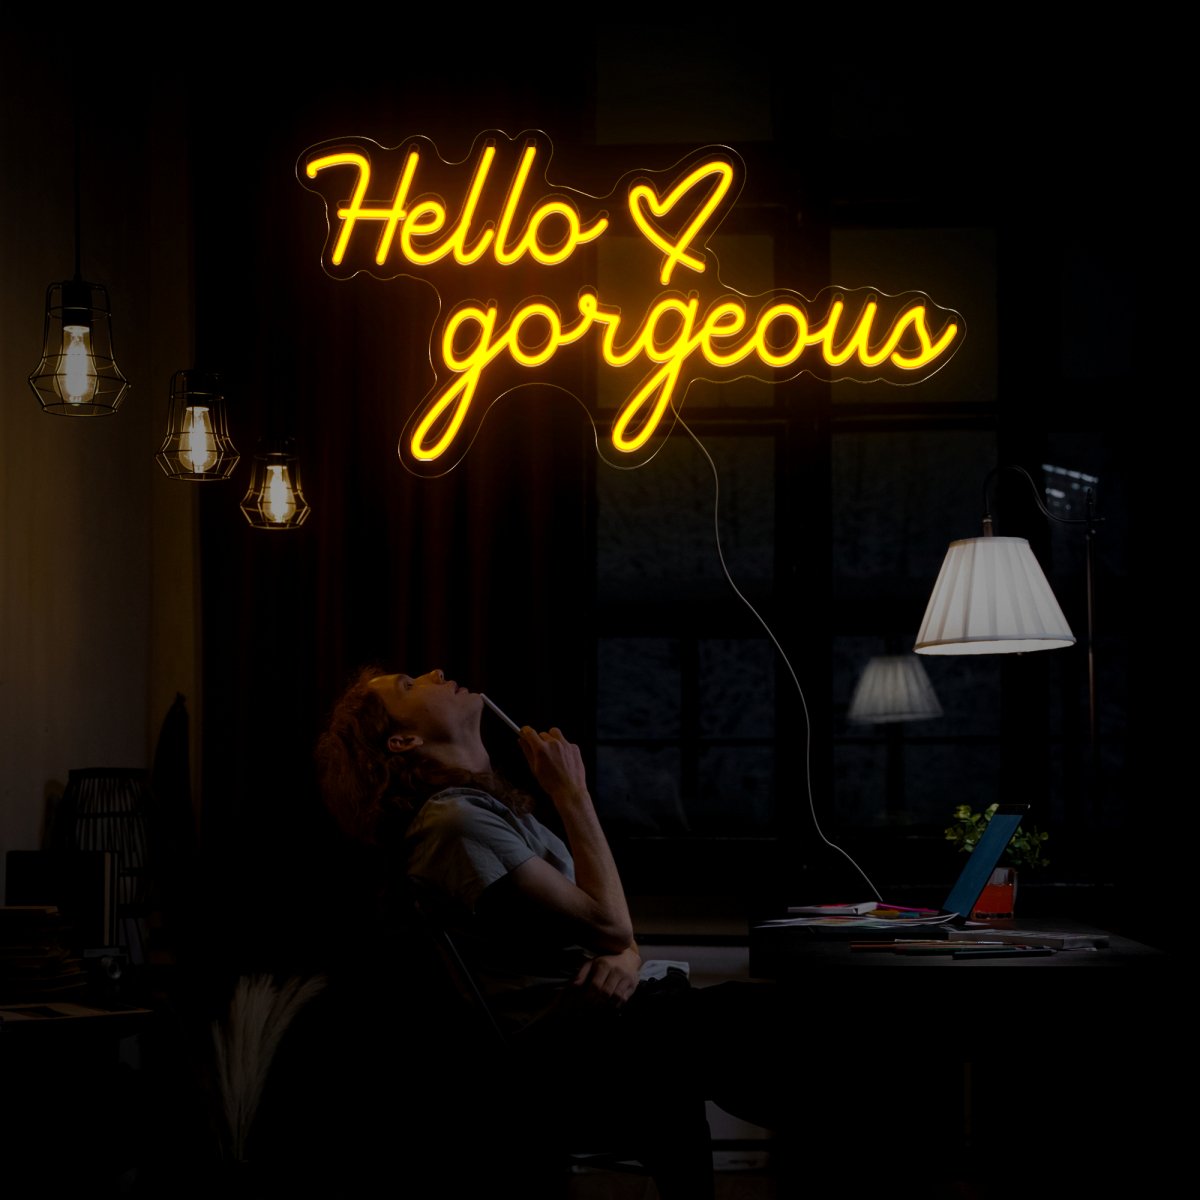 Hello Gorgeous Heart Neon Sign - Reels Custom